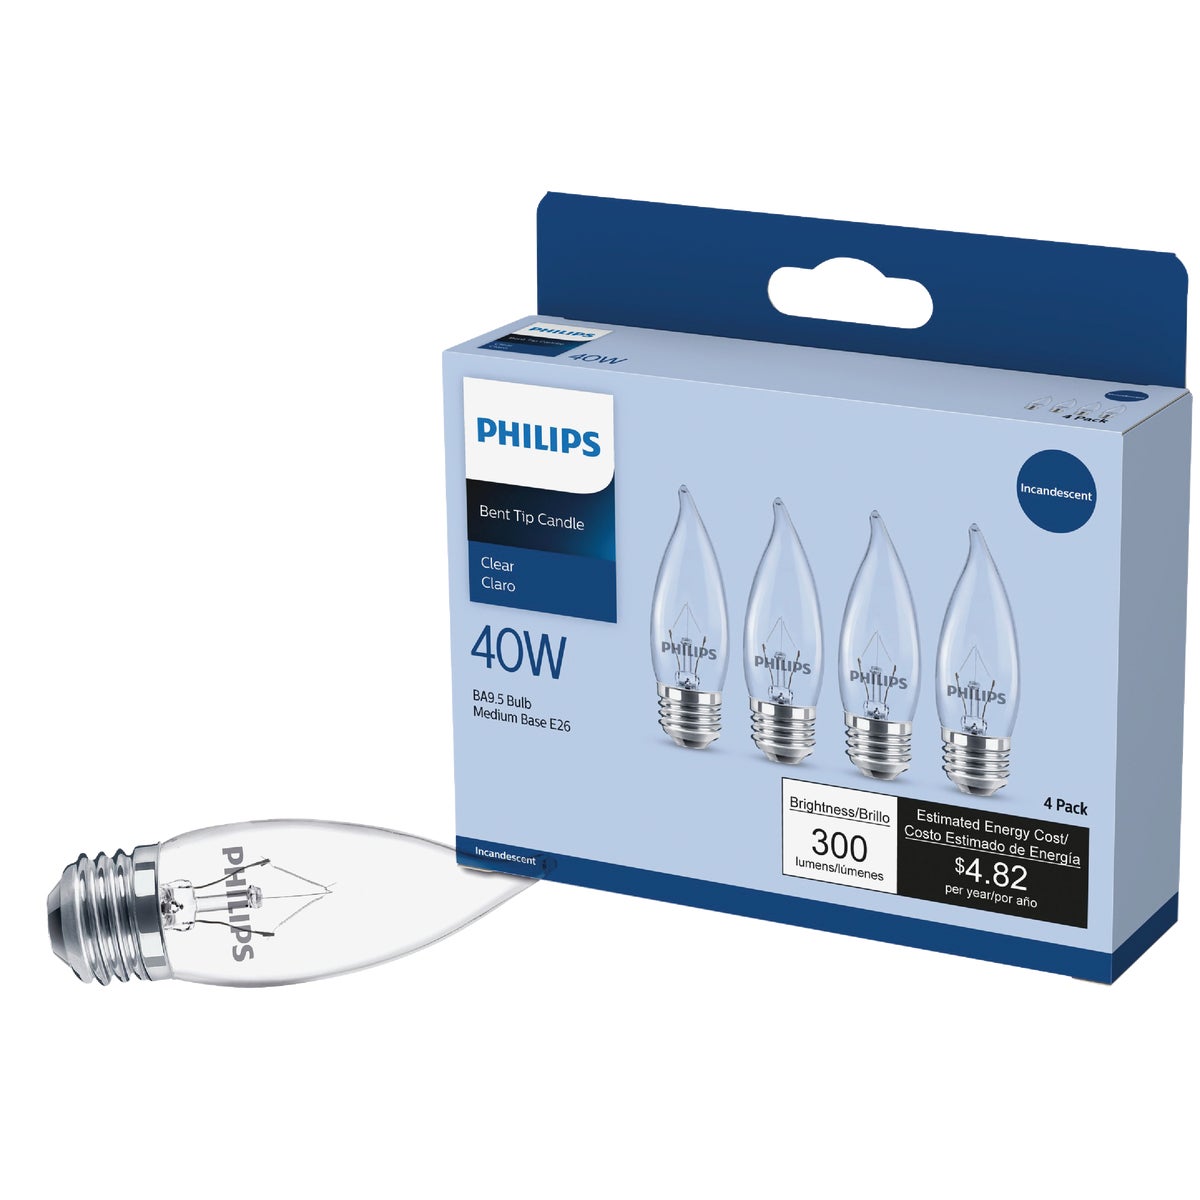 Philips DuraMax 40W Clear Medium BA9.5 Incandescent Bent Tip Light Bulb (4-Pack)